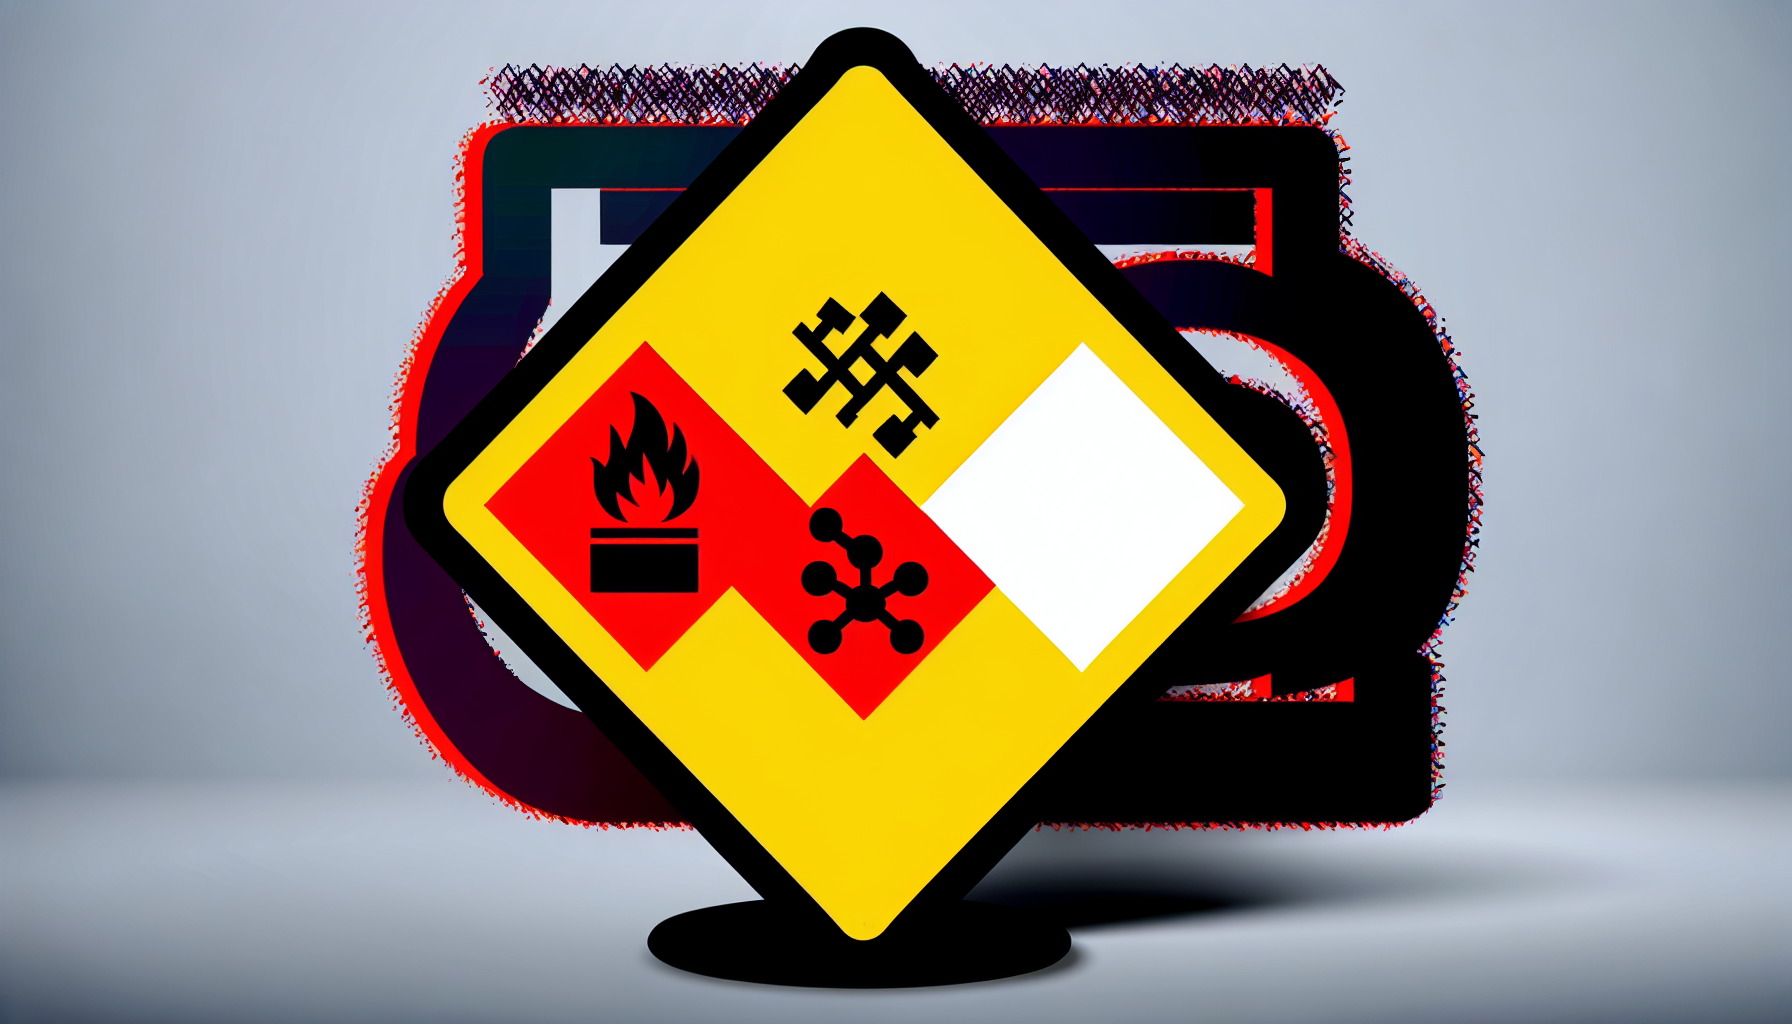 A hazardous materials warning sign